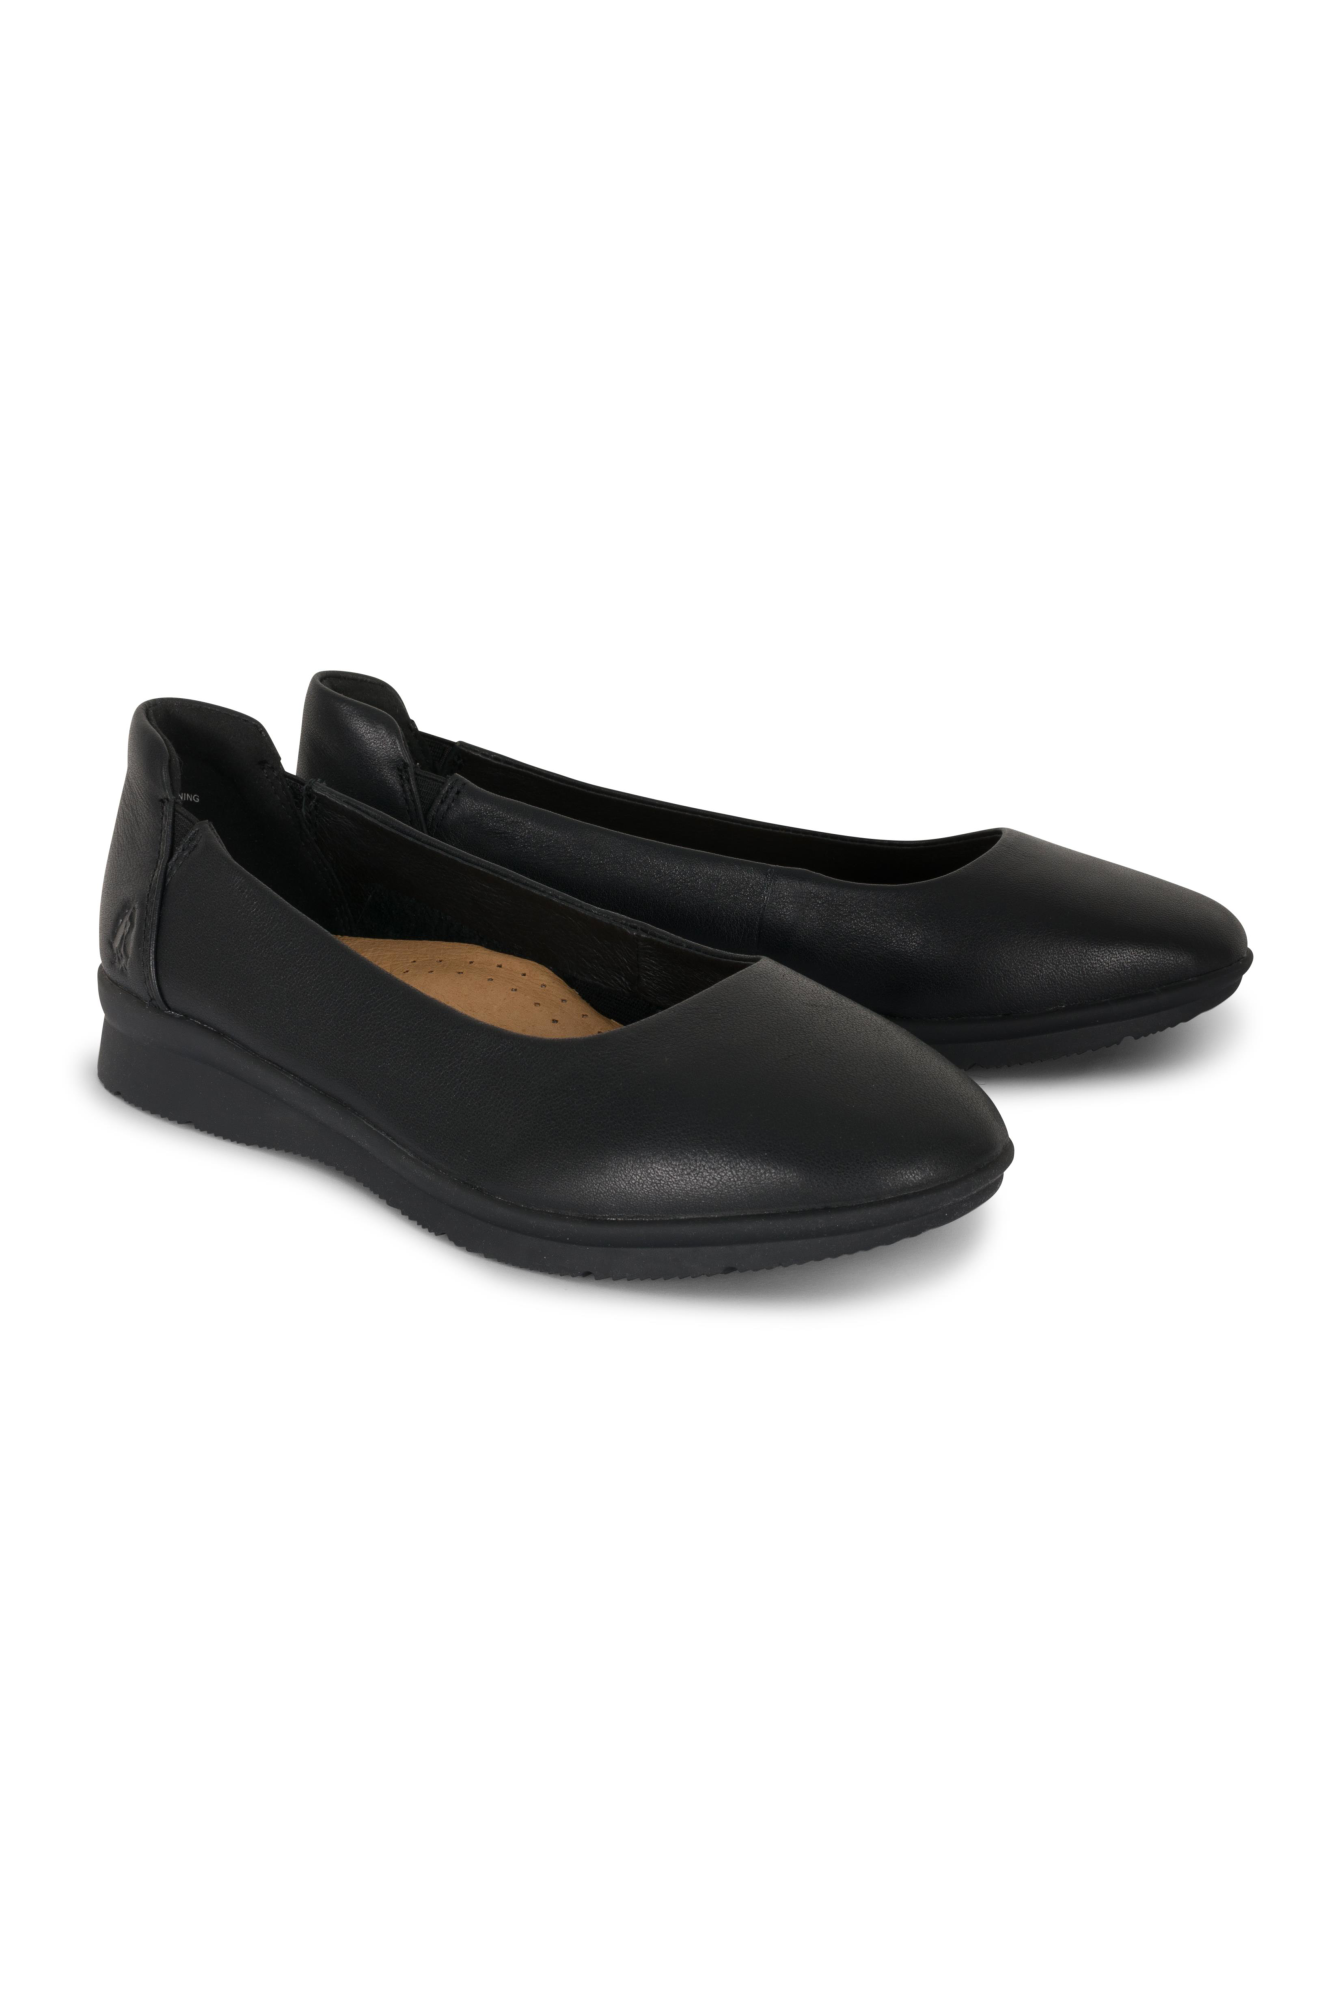 Leather slip on Shoe | BLACK | NELLIE WW – Ballentynes Fashion Central